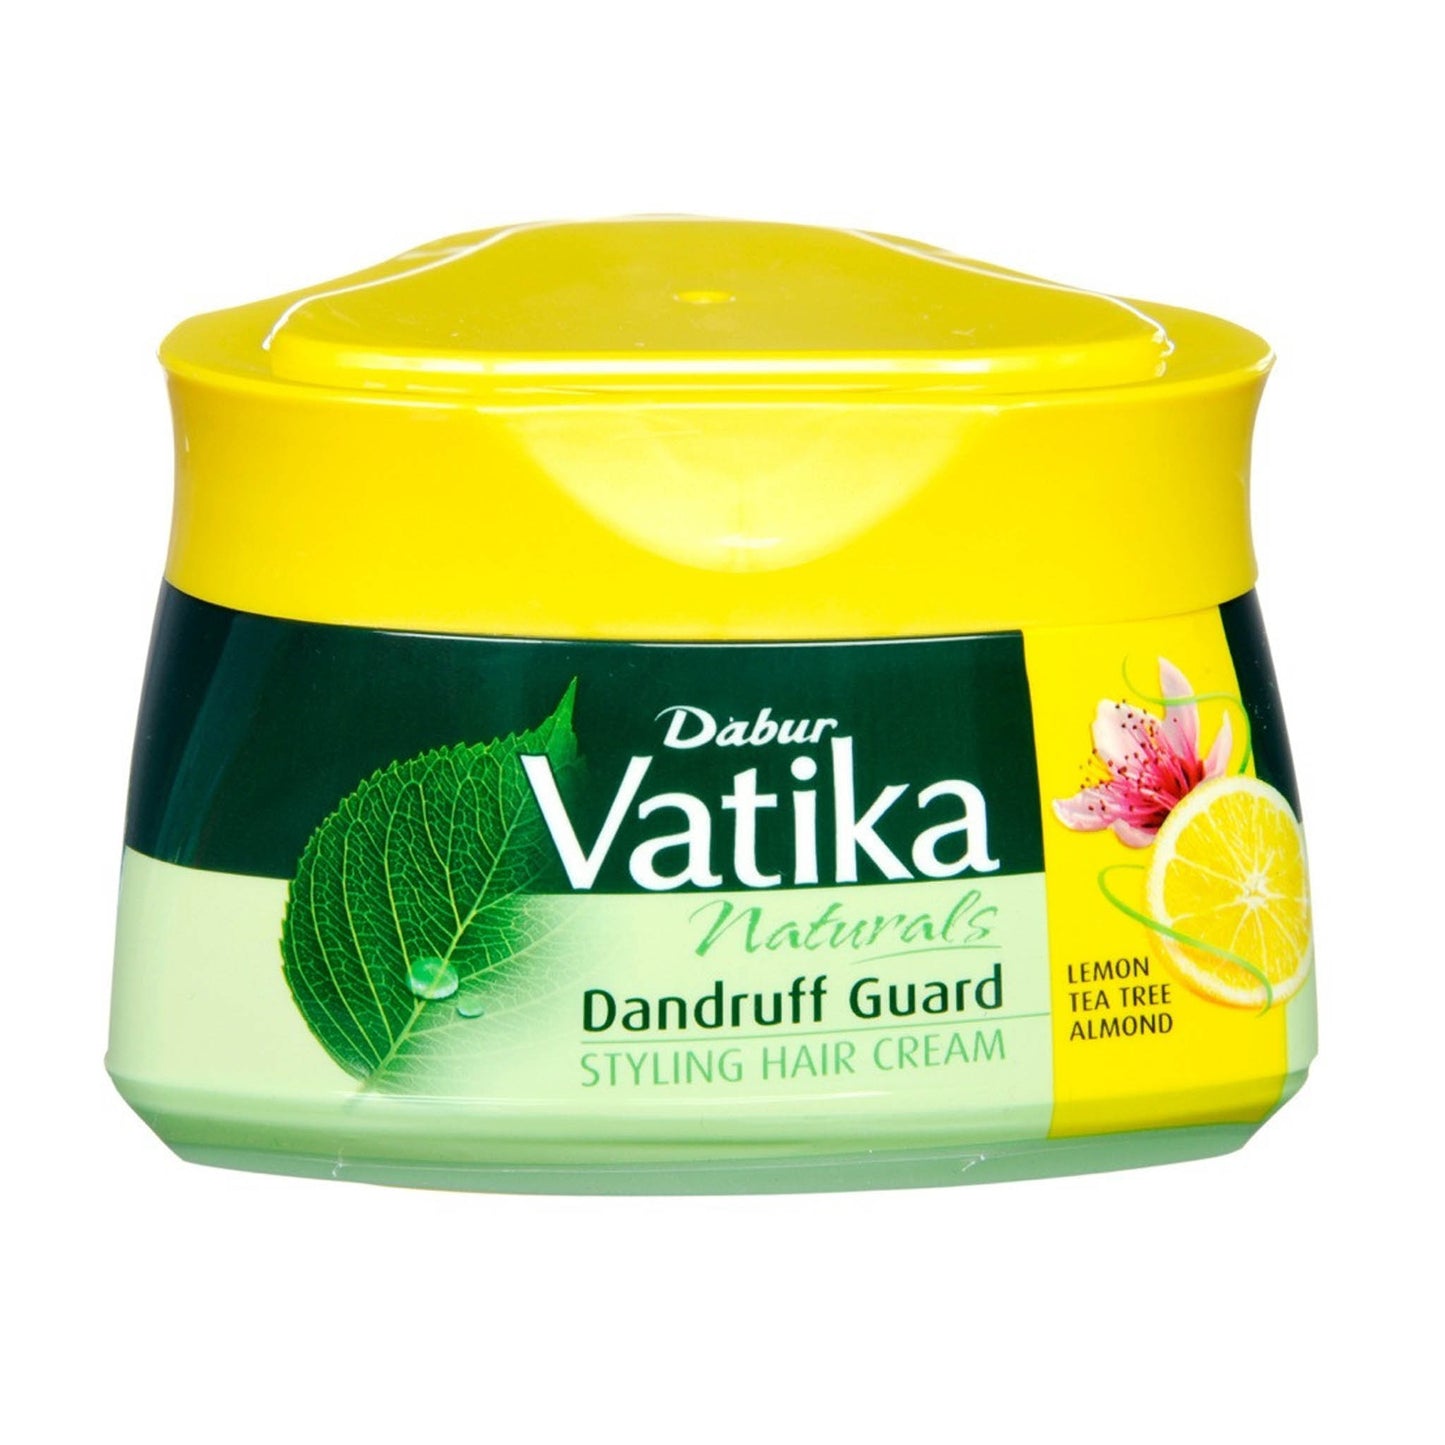 VATIKA - DANDRUFF GUARD STYLING HAIR CREAM WITH LEMON, TEA TREE & ALMOND - 140ML